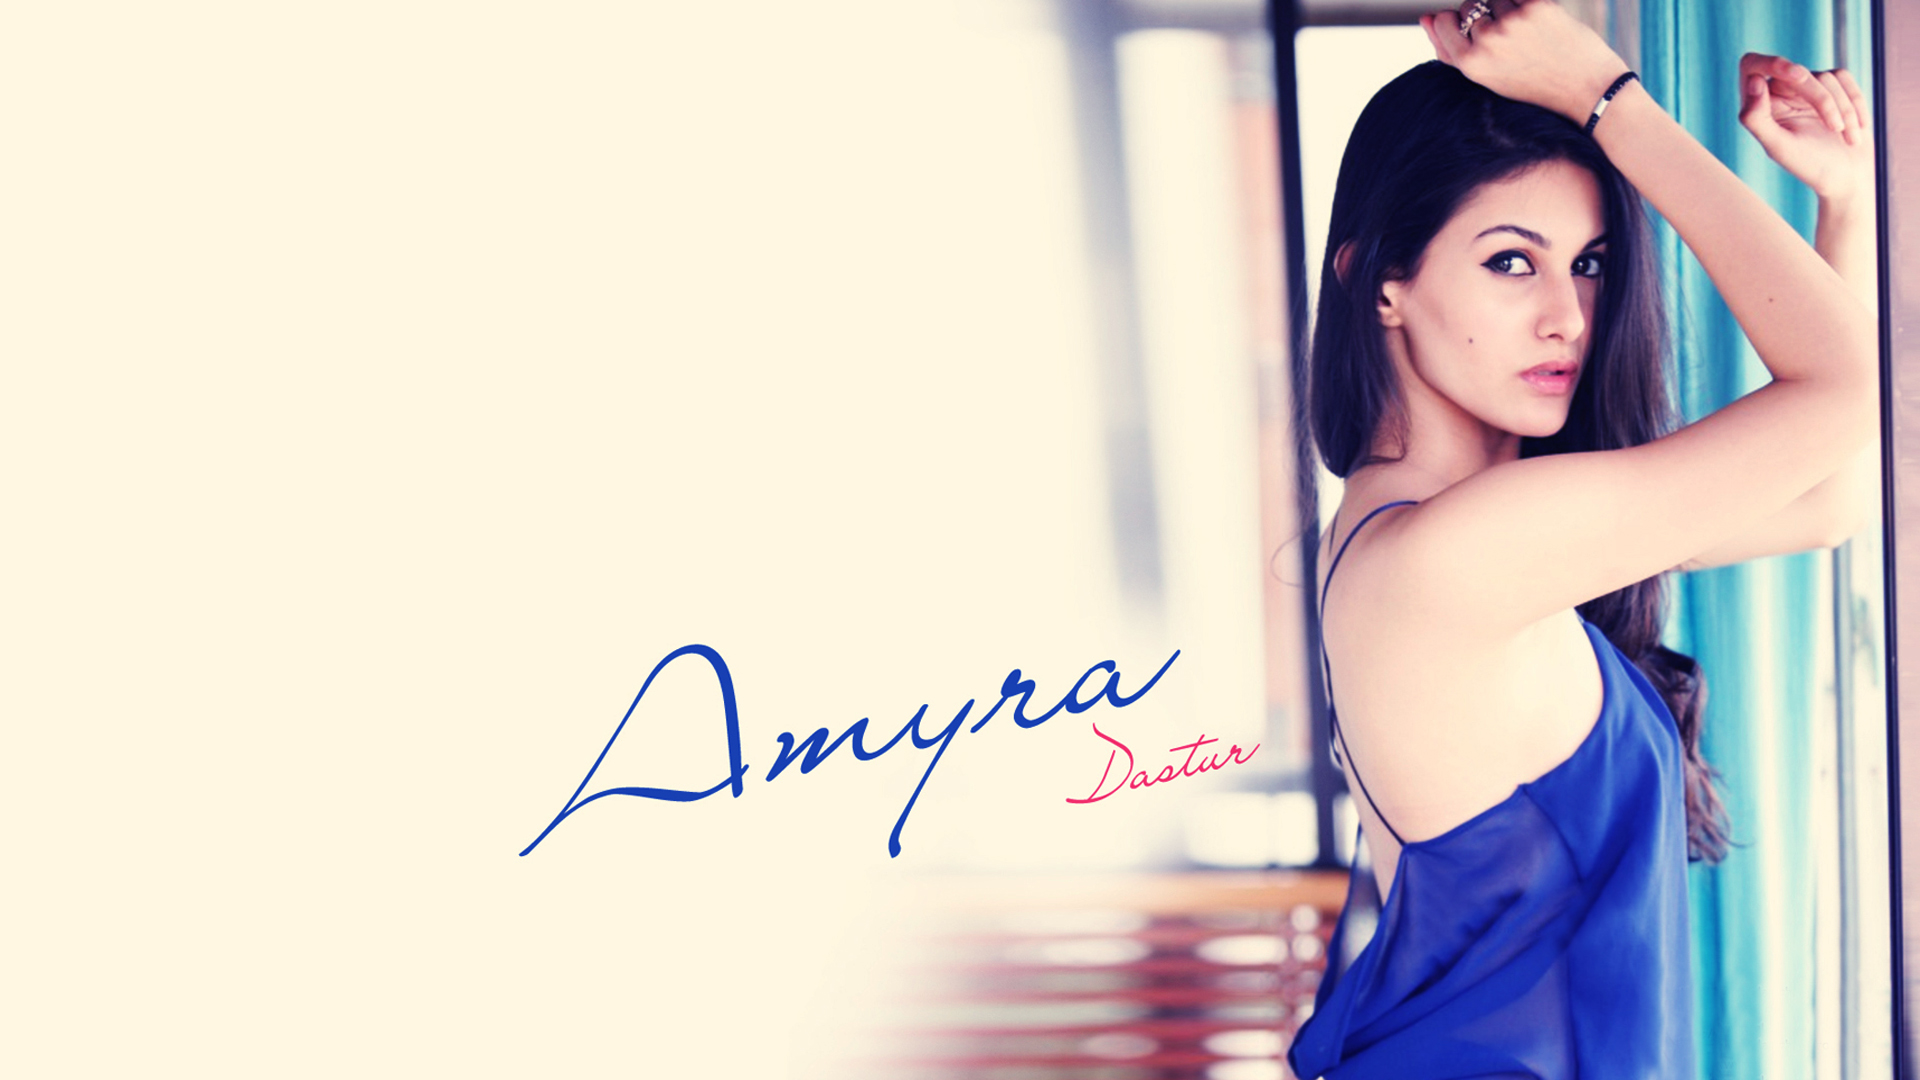 Amyra Dastur HD Wallpapers